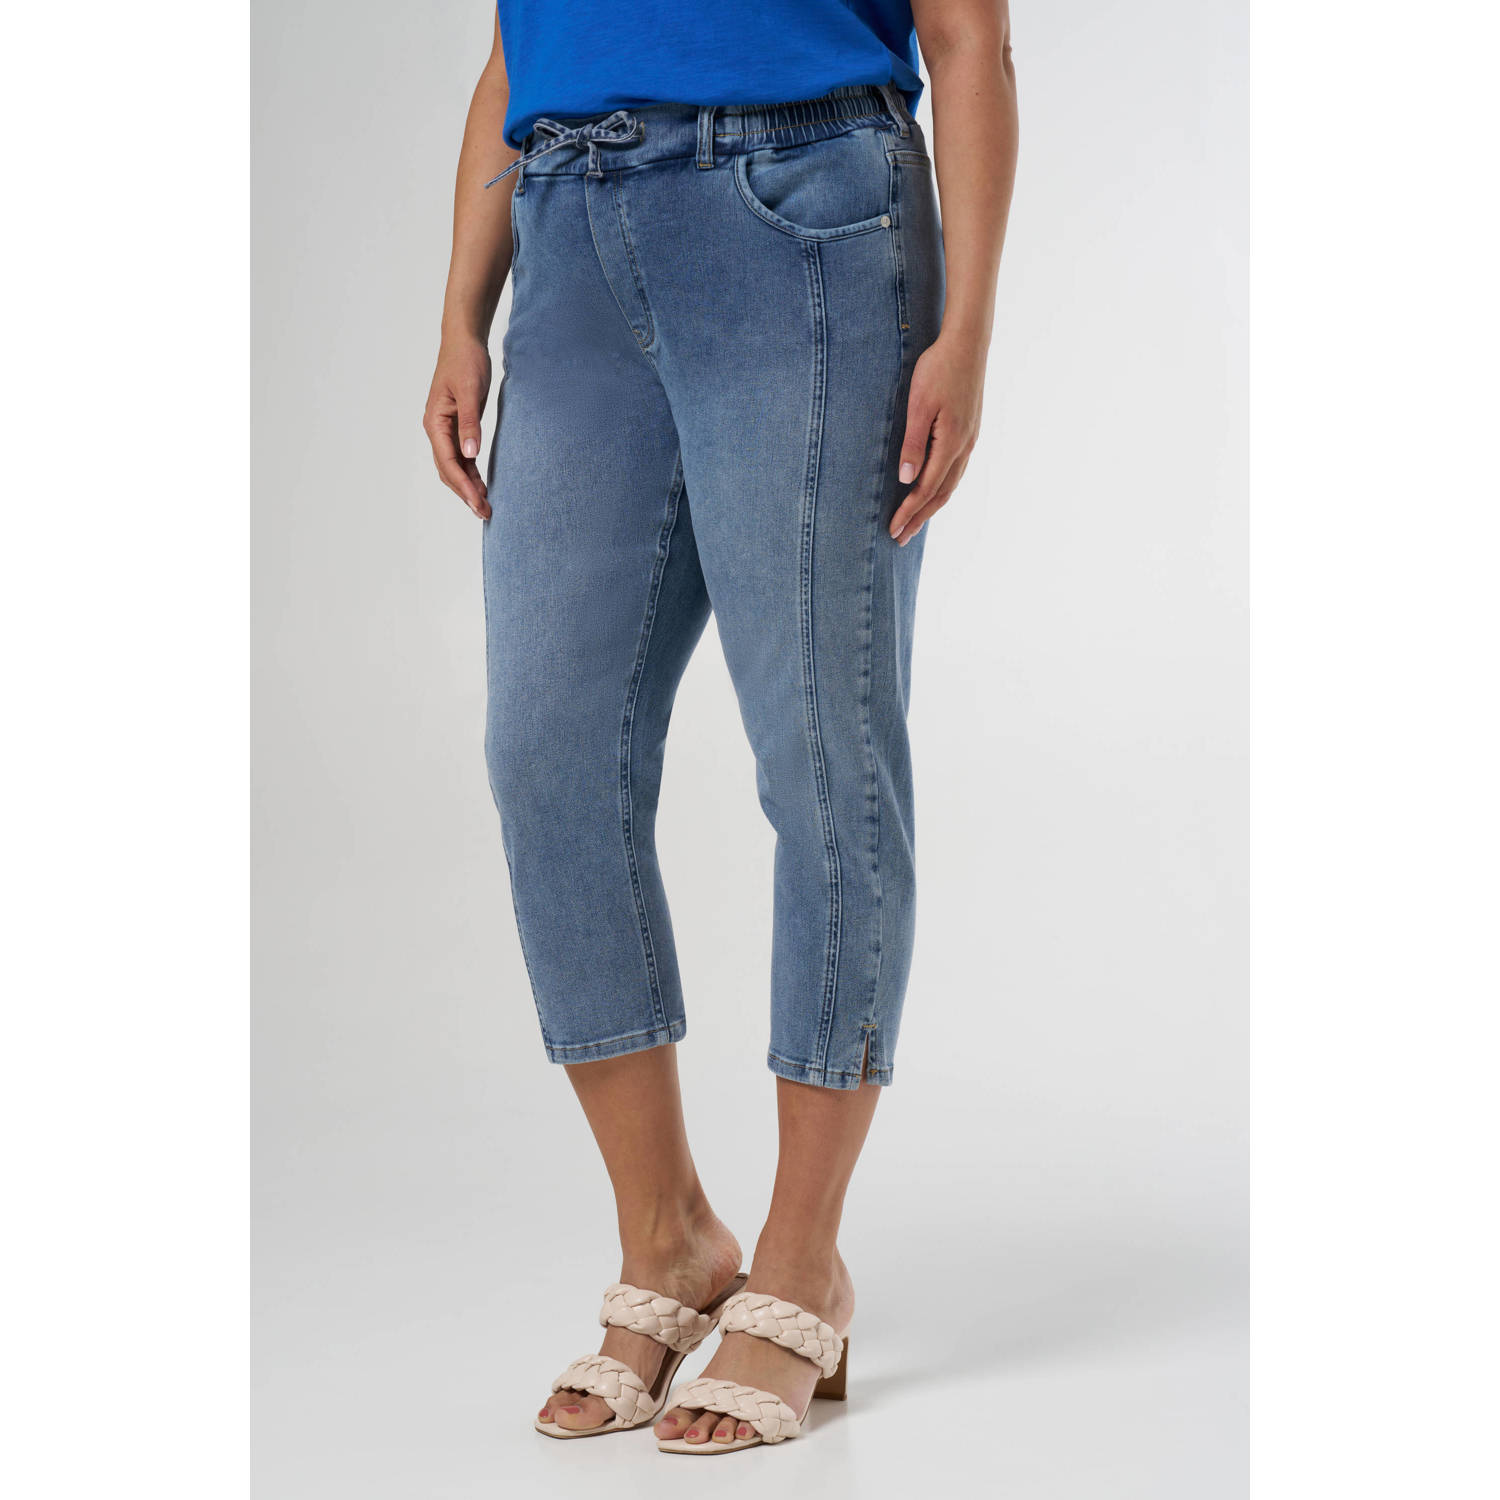 MS Mode capri jeans light blue denim